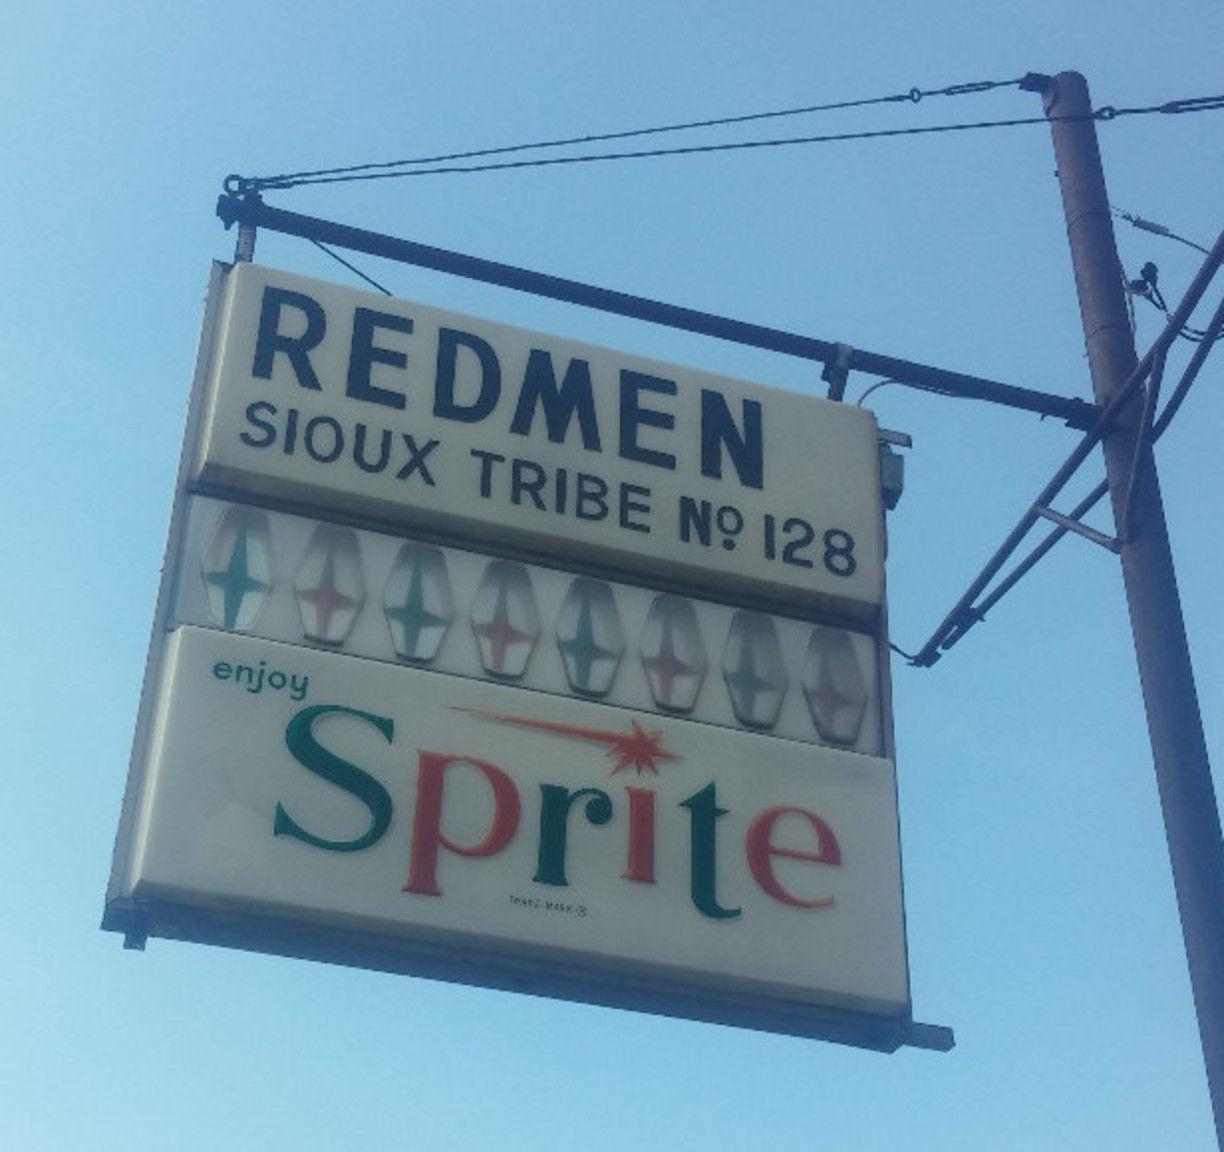 Vintage Sprite Logo - Red Men Lodge, Columbus, Ohio out the vintage Sprite logo